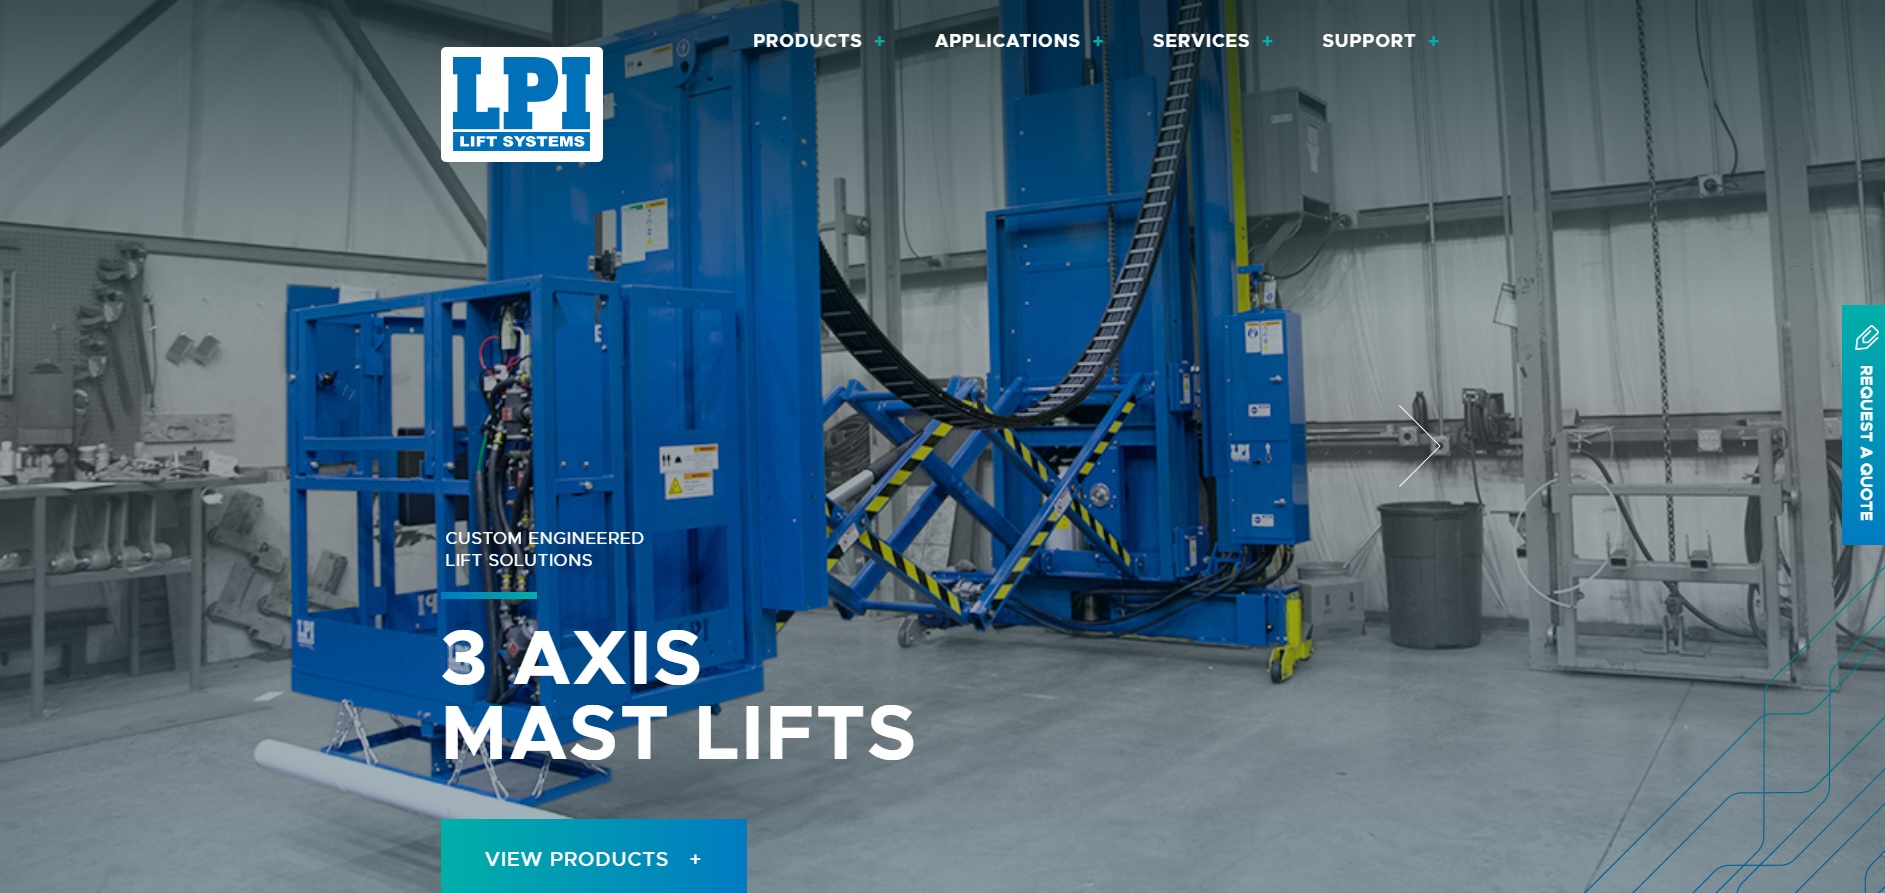 LPI Lift Systems™